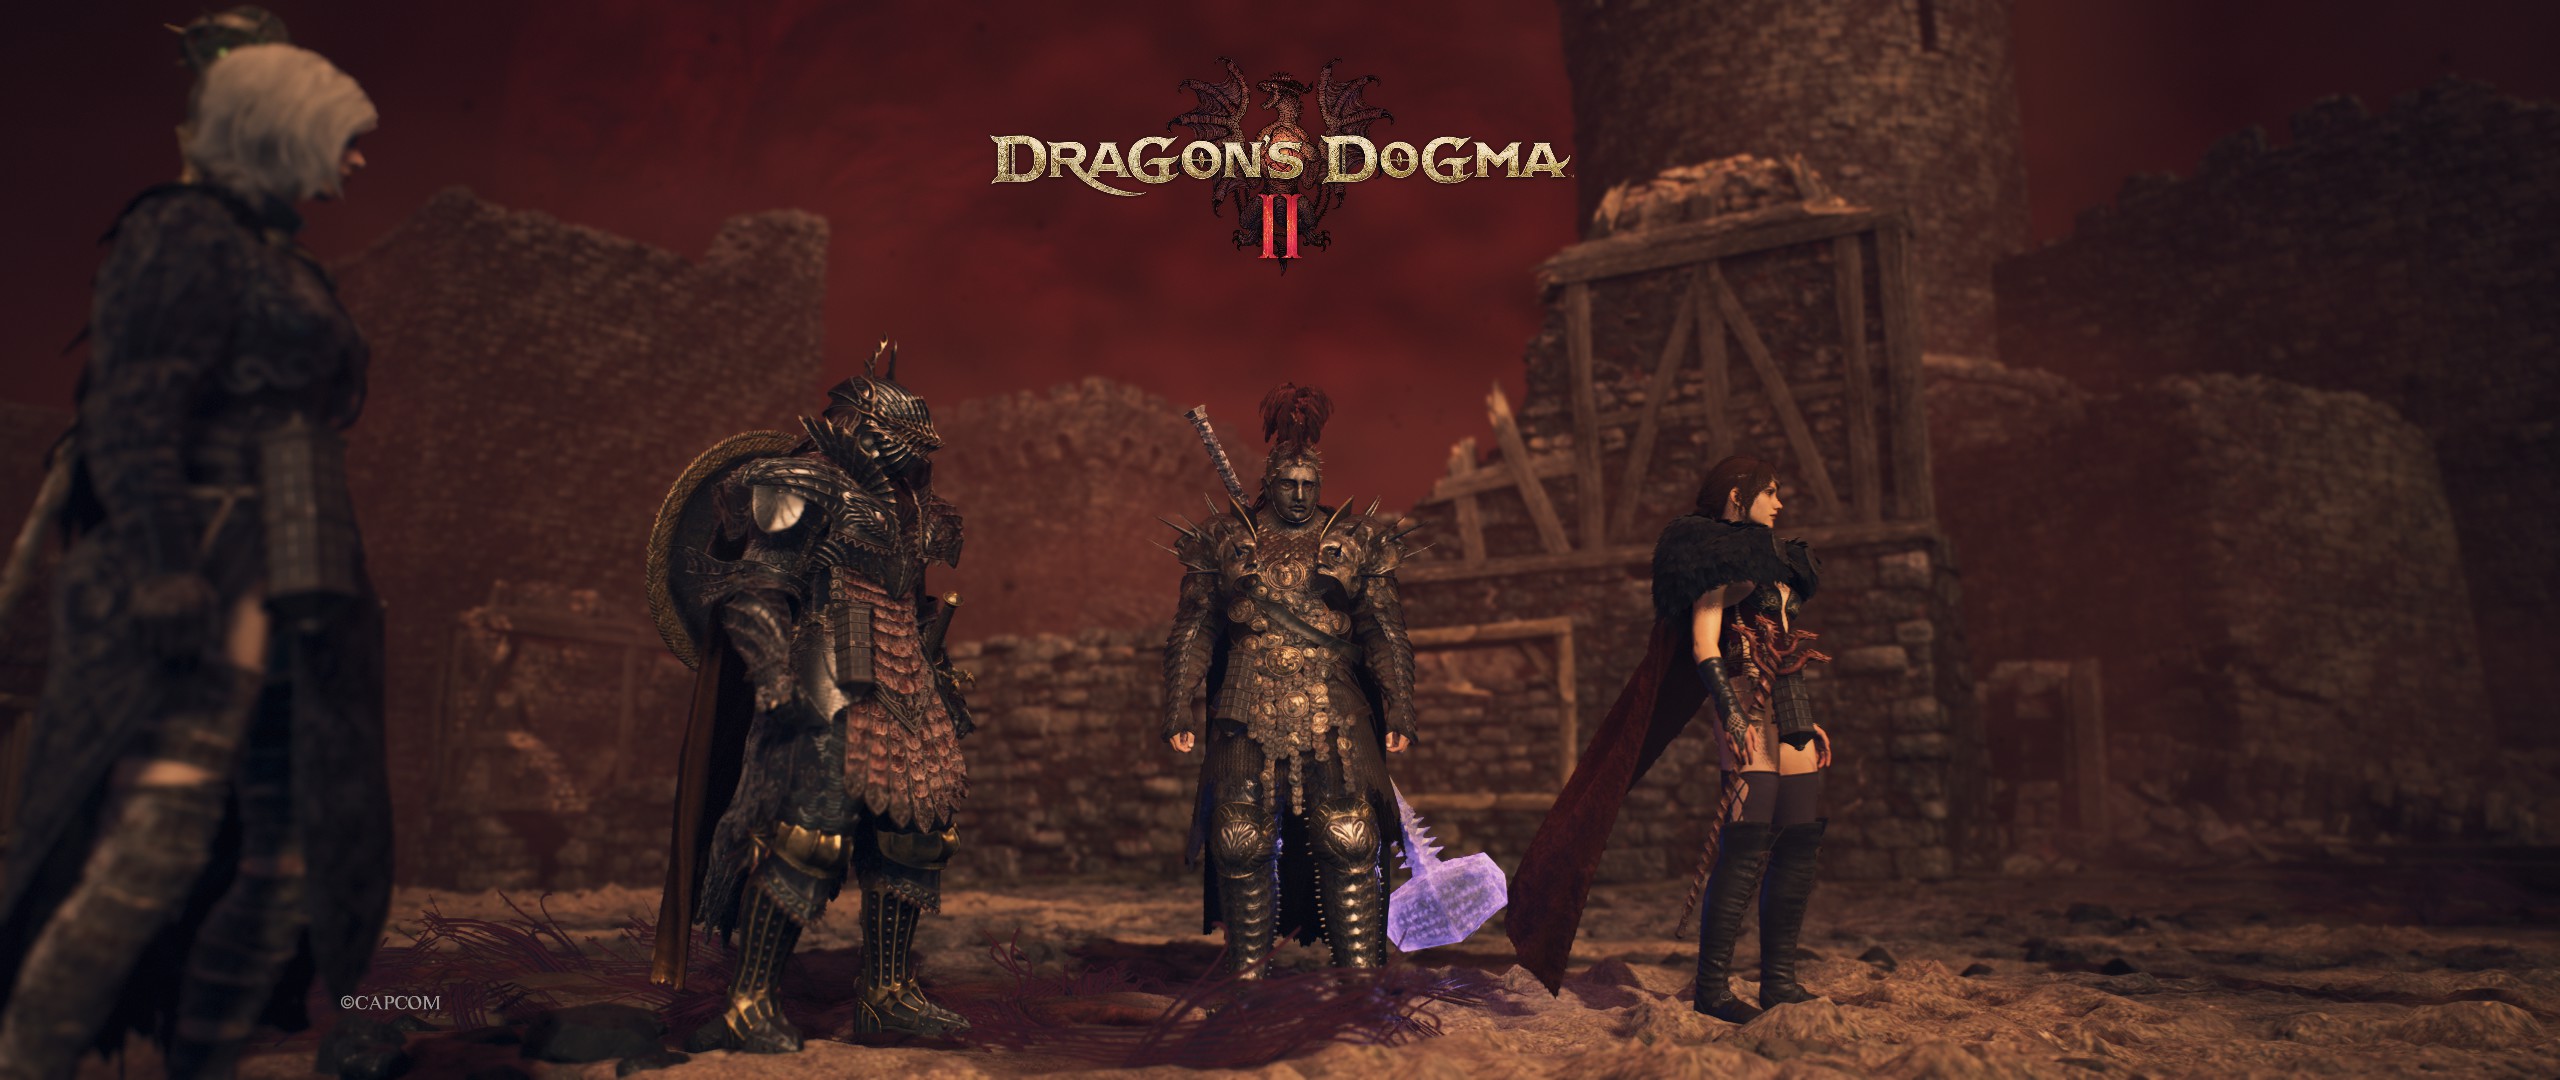 General 2560x1080 DD2 Game Games DD2 Dragons Dogma 2 Capcom video games video game characters Dragon's Dogma Dragon's Dogma 2